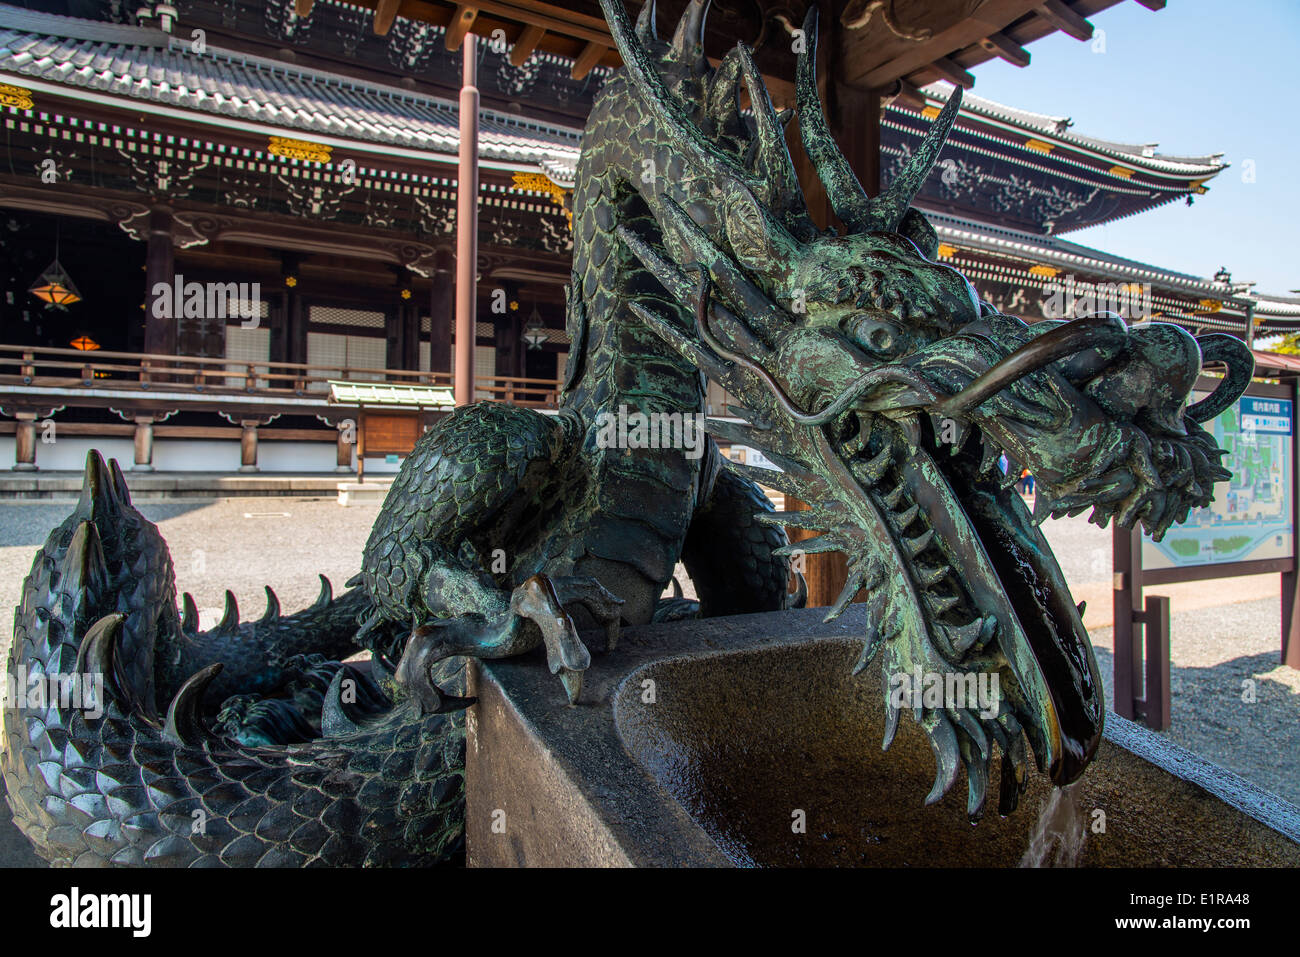 Acqua di bronzo dragon fontana, Higashi-Honganji tempio, Kyoto, Giappone Foto Stock